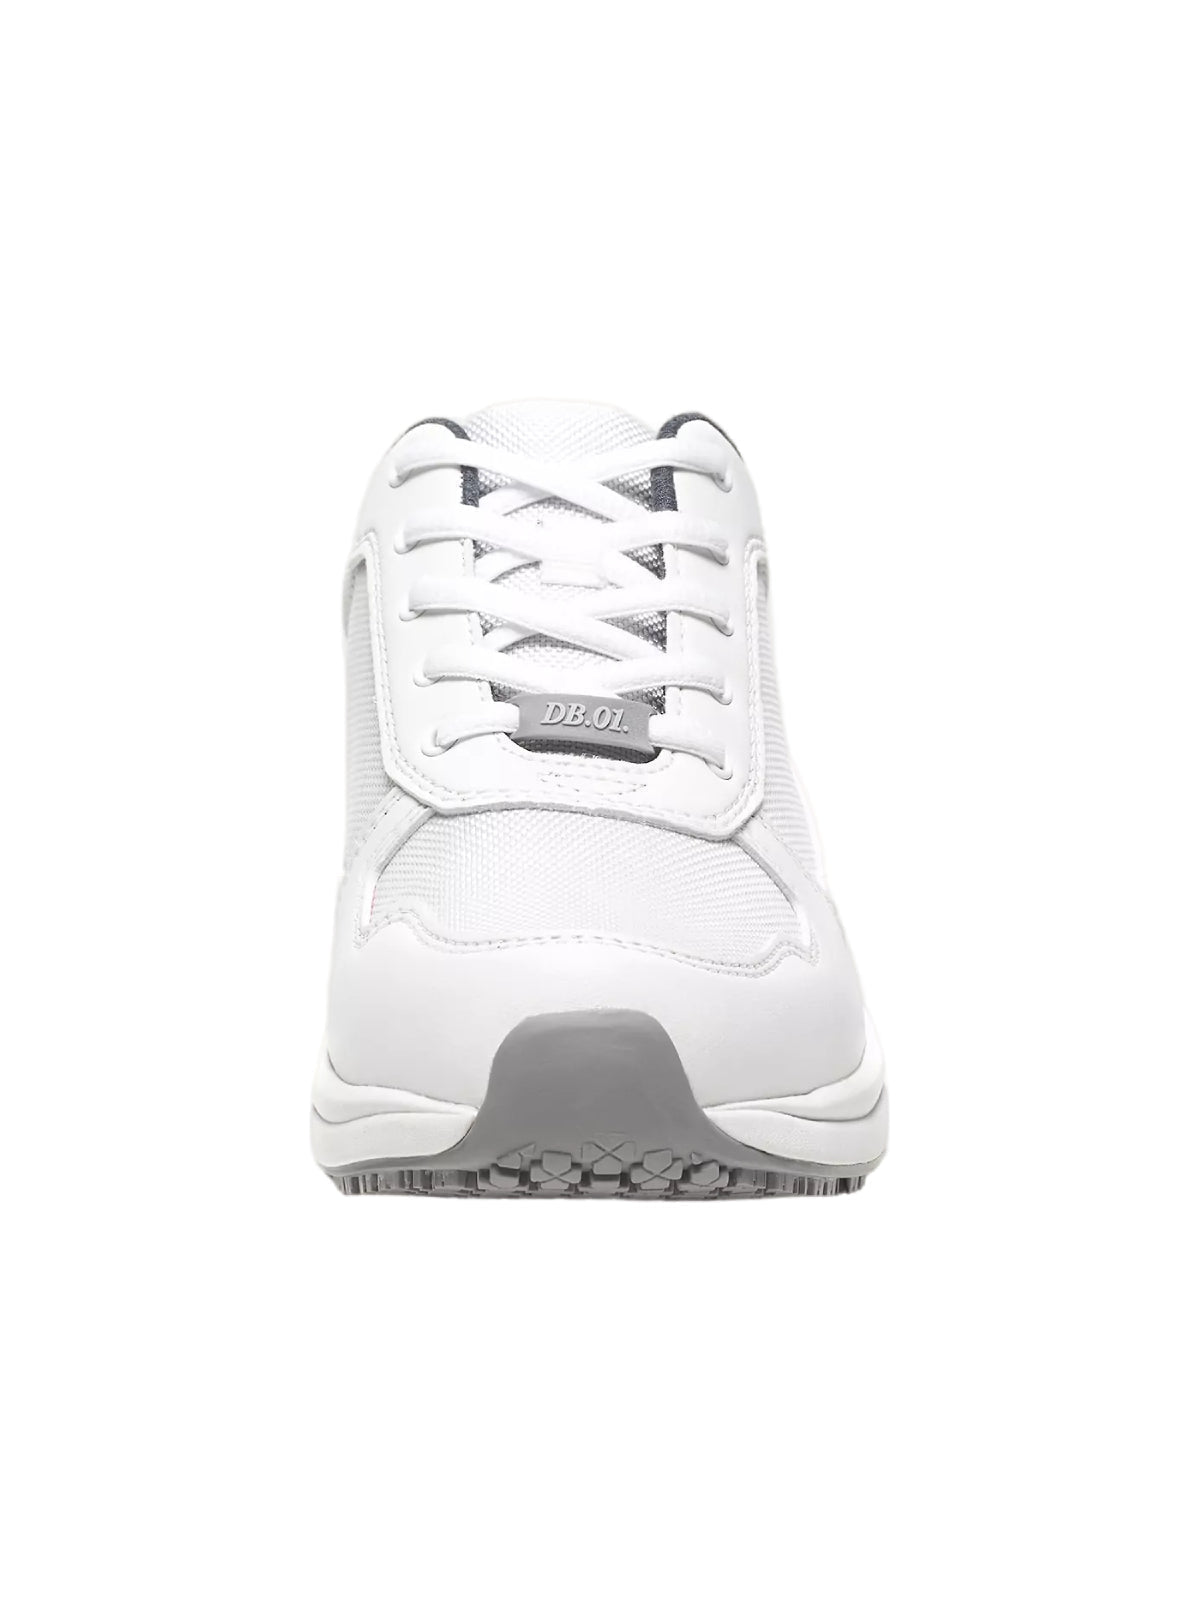 Work Sneaker DB.01 White by New -  ChefsCotton